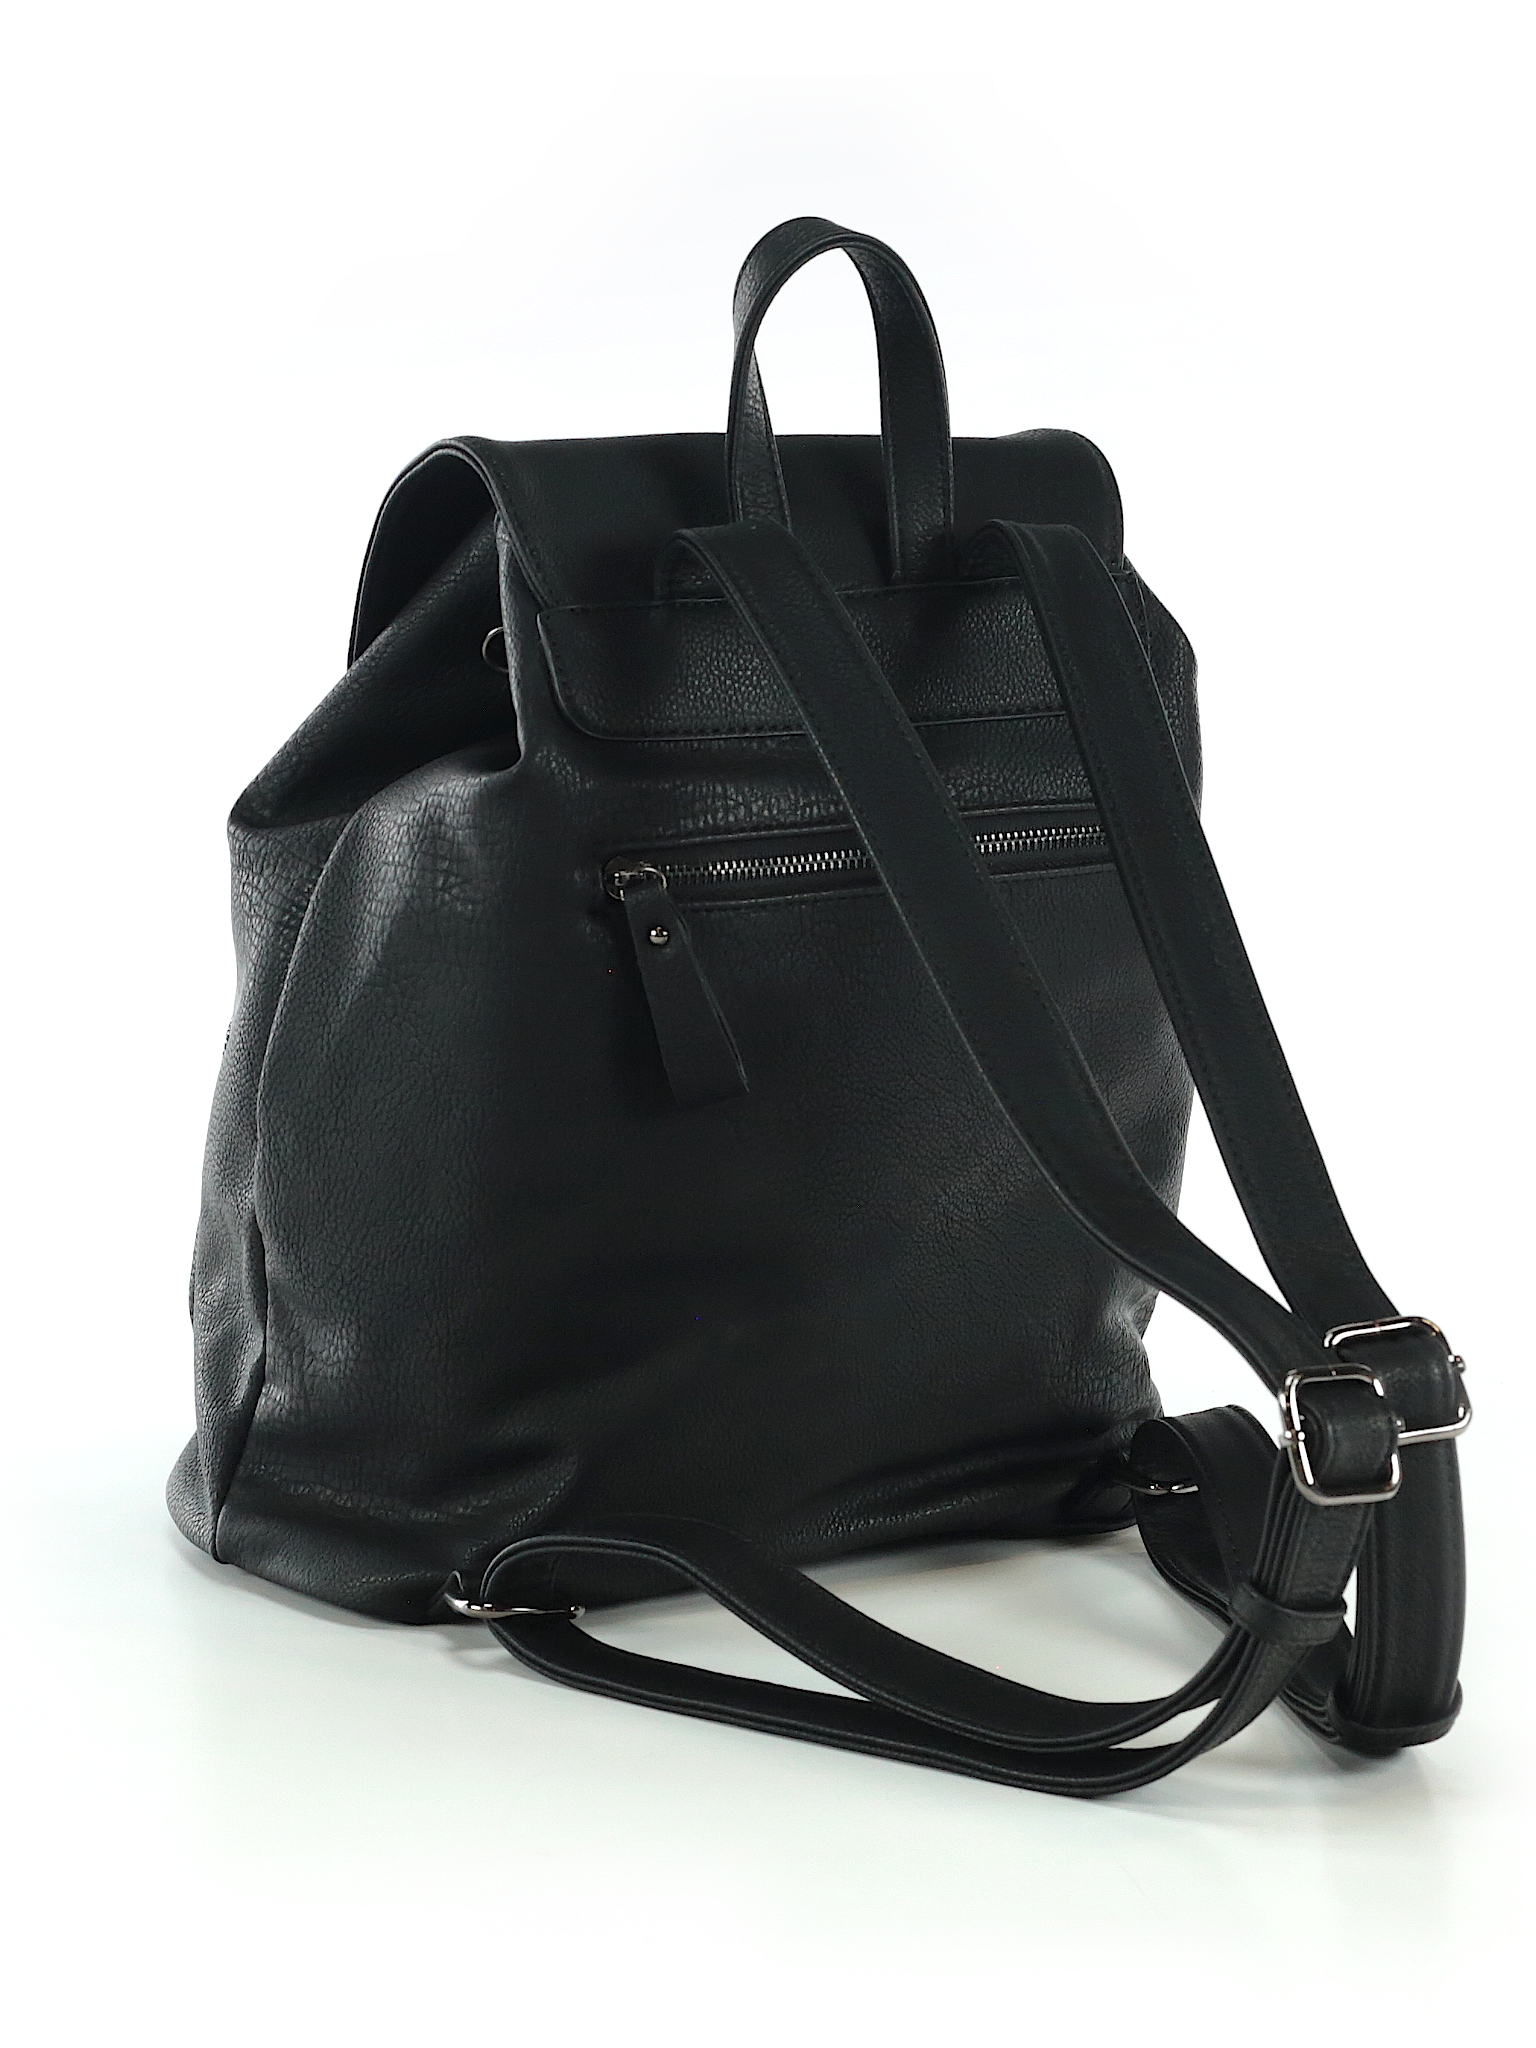 Miztique Solid Black Backpack One Size - 45% off